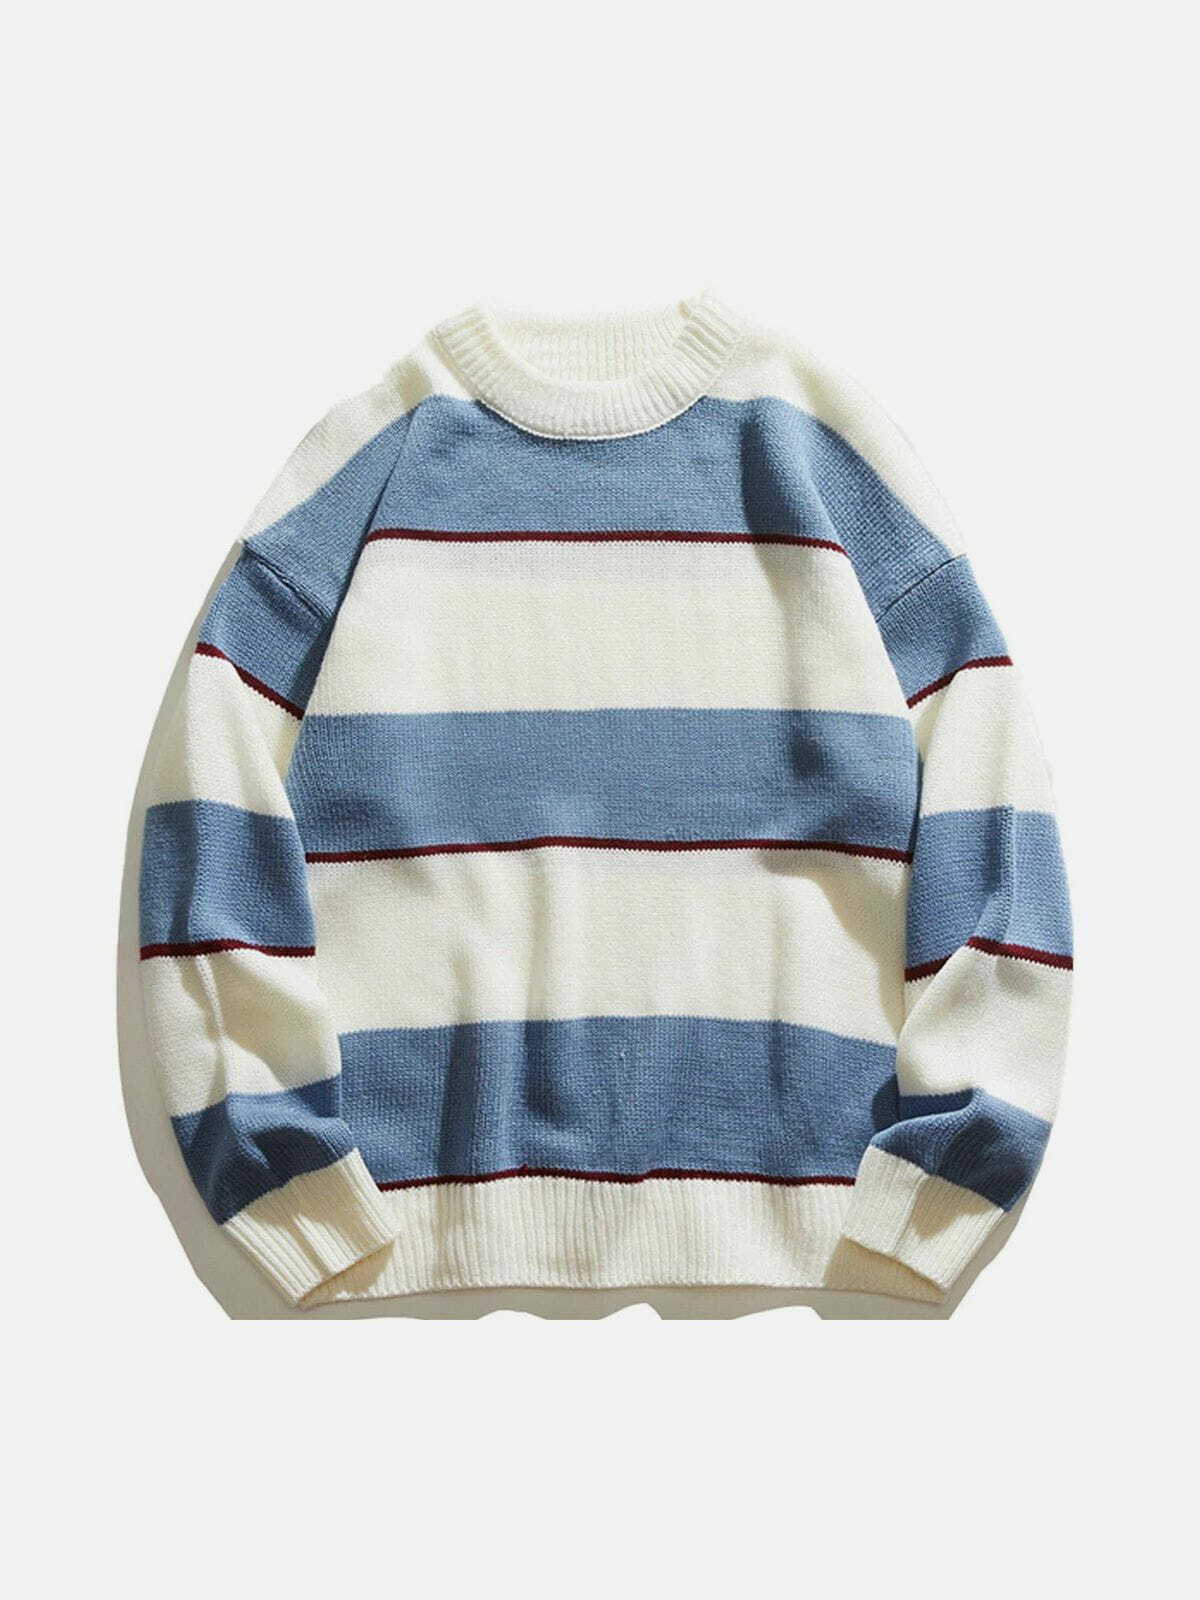 vibrant stitched stripes knit sweater retro urban style 4535